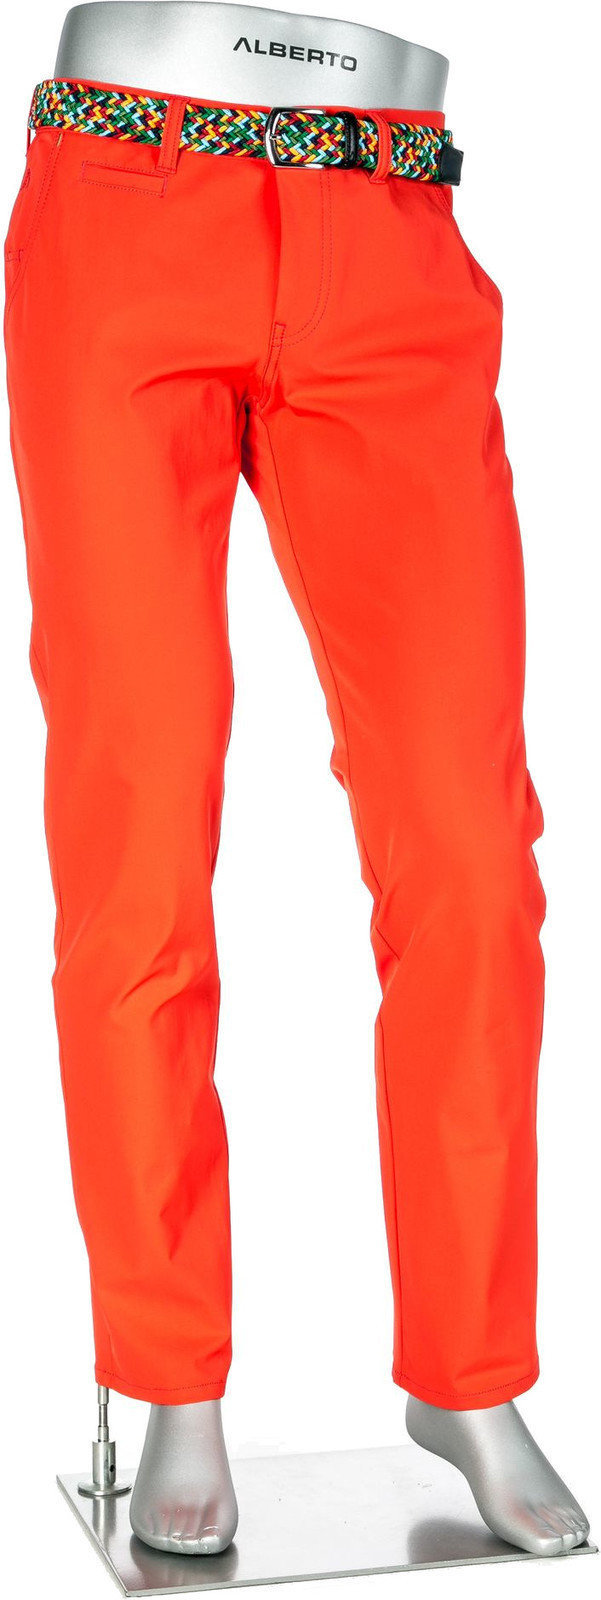 Trousers Alberto Rookie 3xDRY Cooler Mens Trousers Orange 46